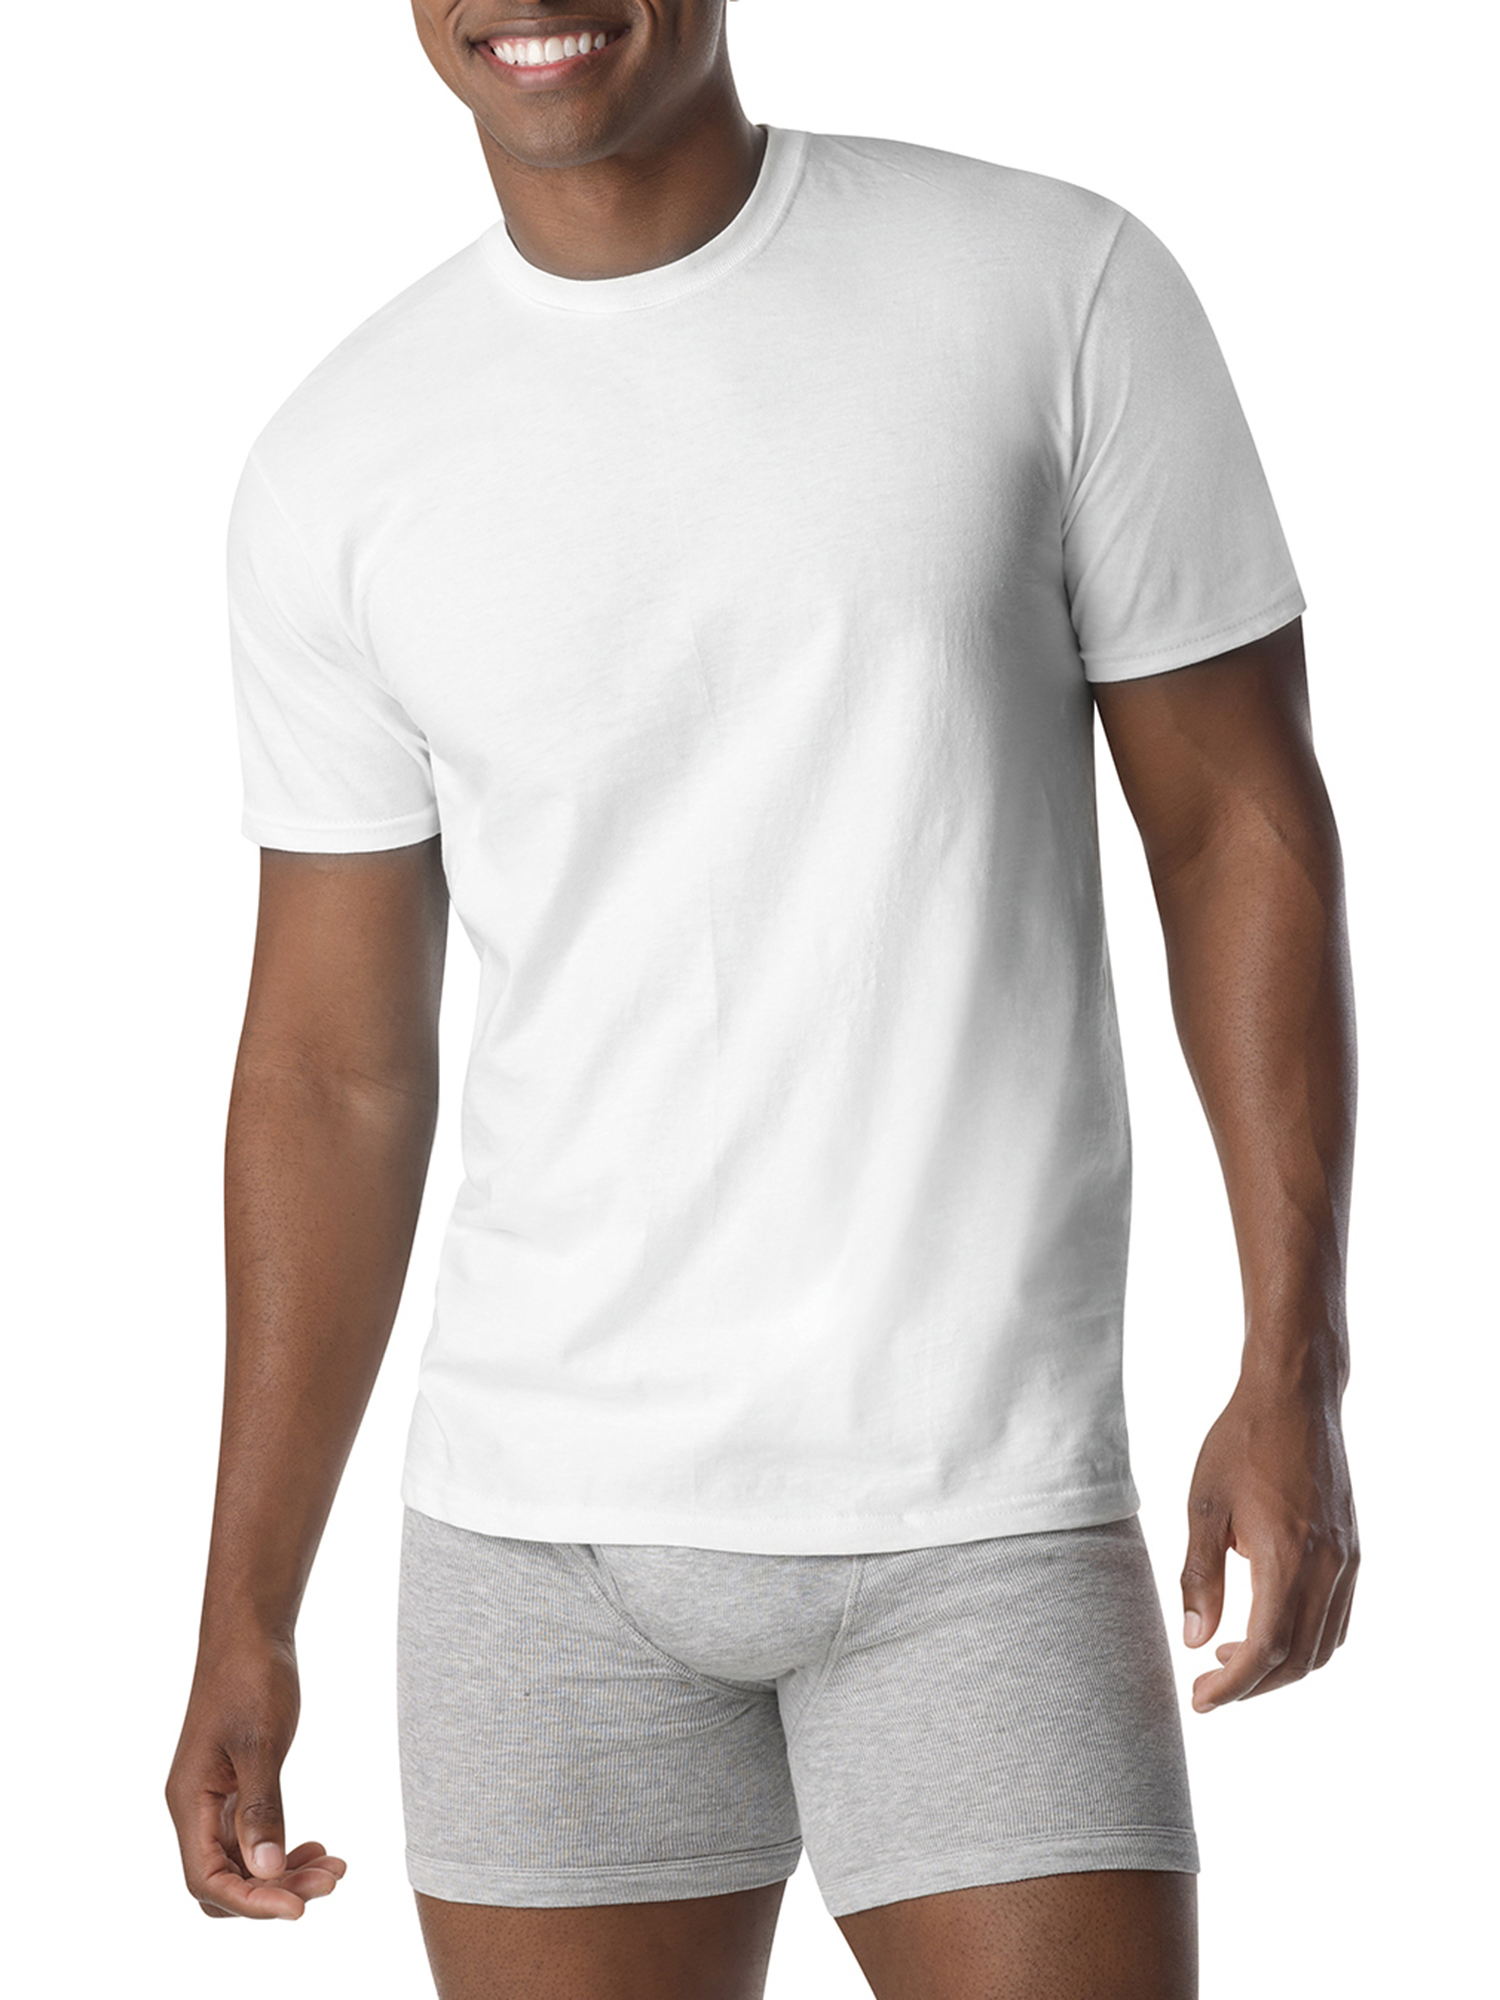 Hanes Men's Super Value Pack White Crew T-Shirt Undershirts, 10 Pack - image 1 of 6